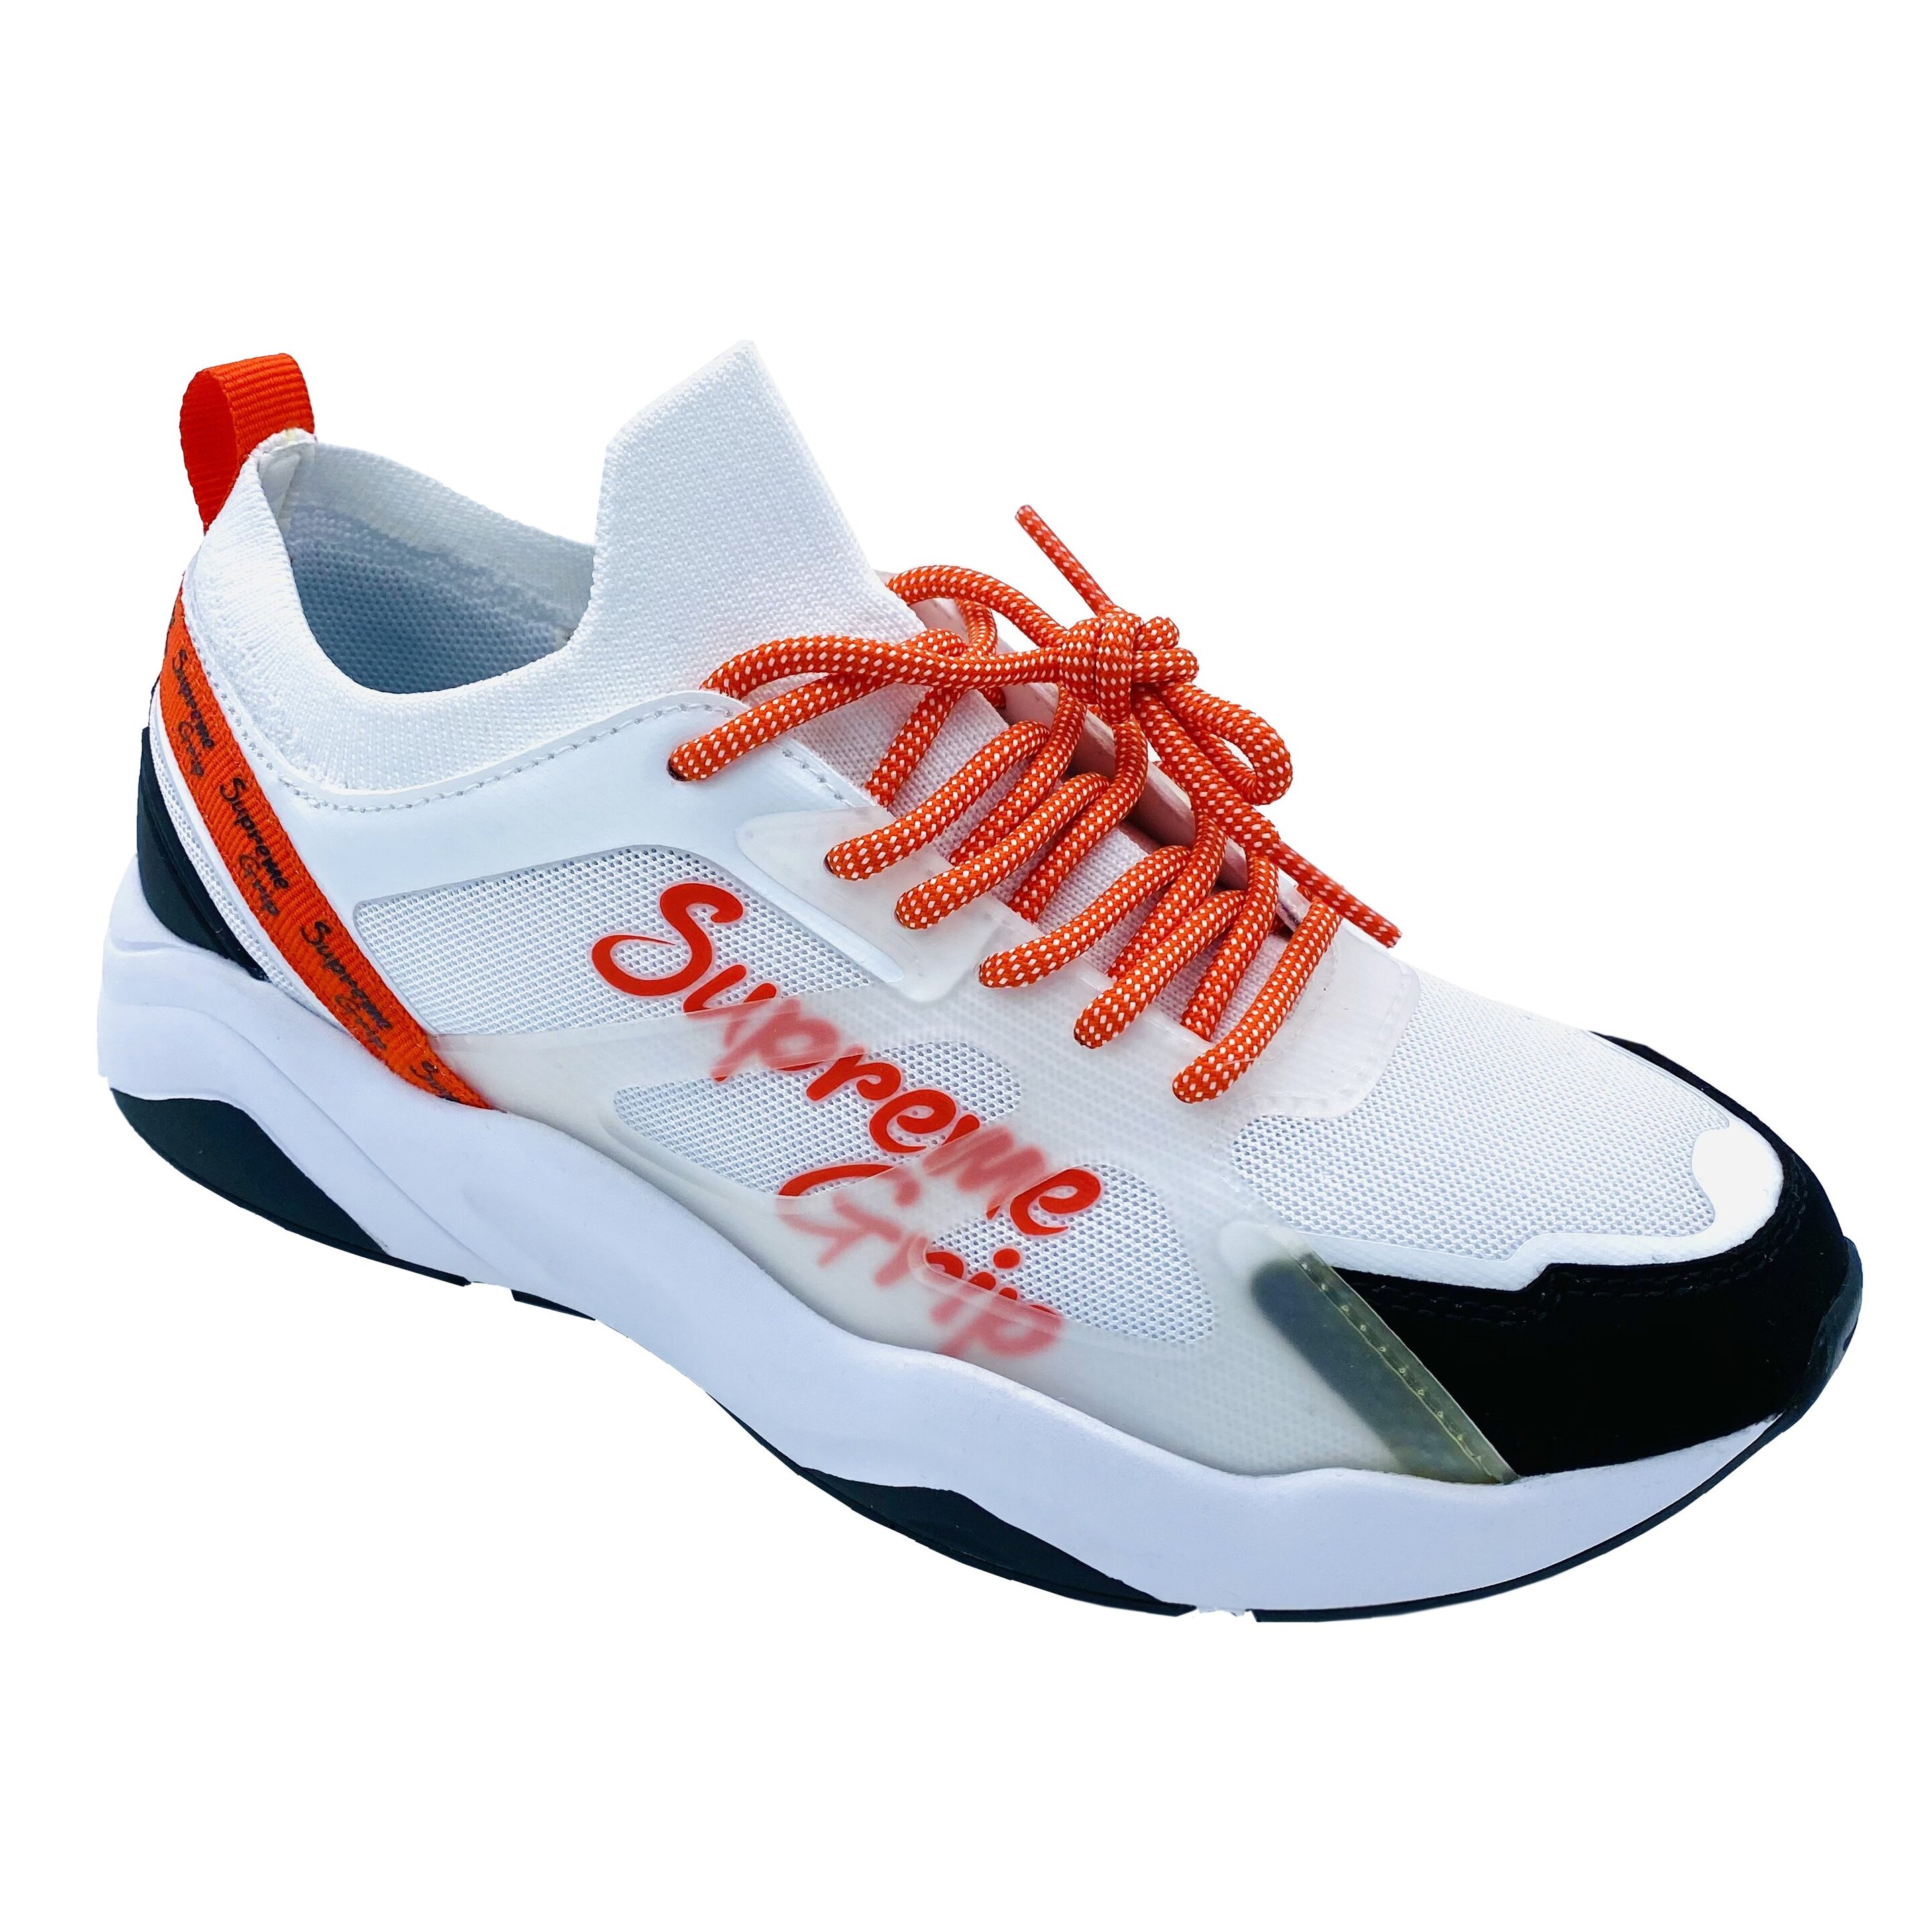 Supreme Grip Calzado Deportivo Life Style Shoes Sharke